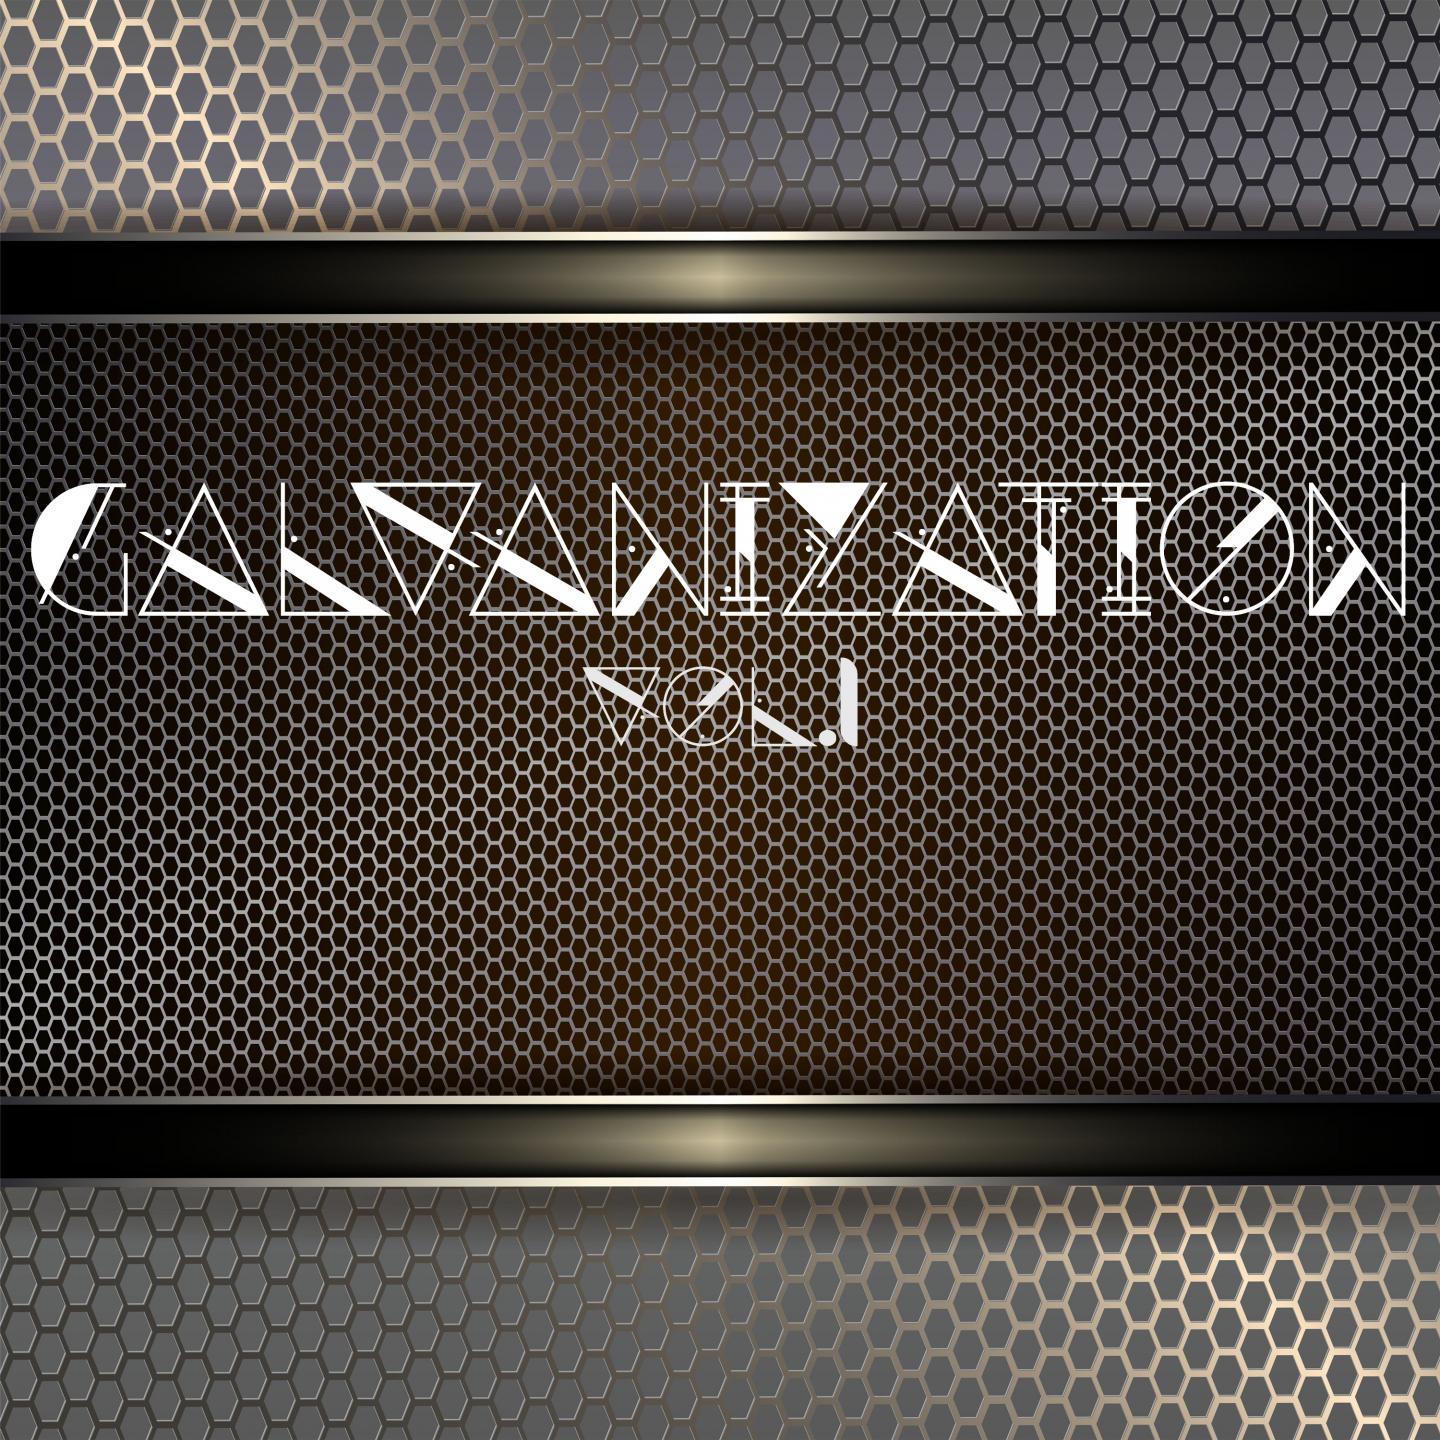 Galvanization, Vol. 1